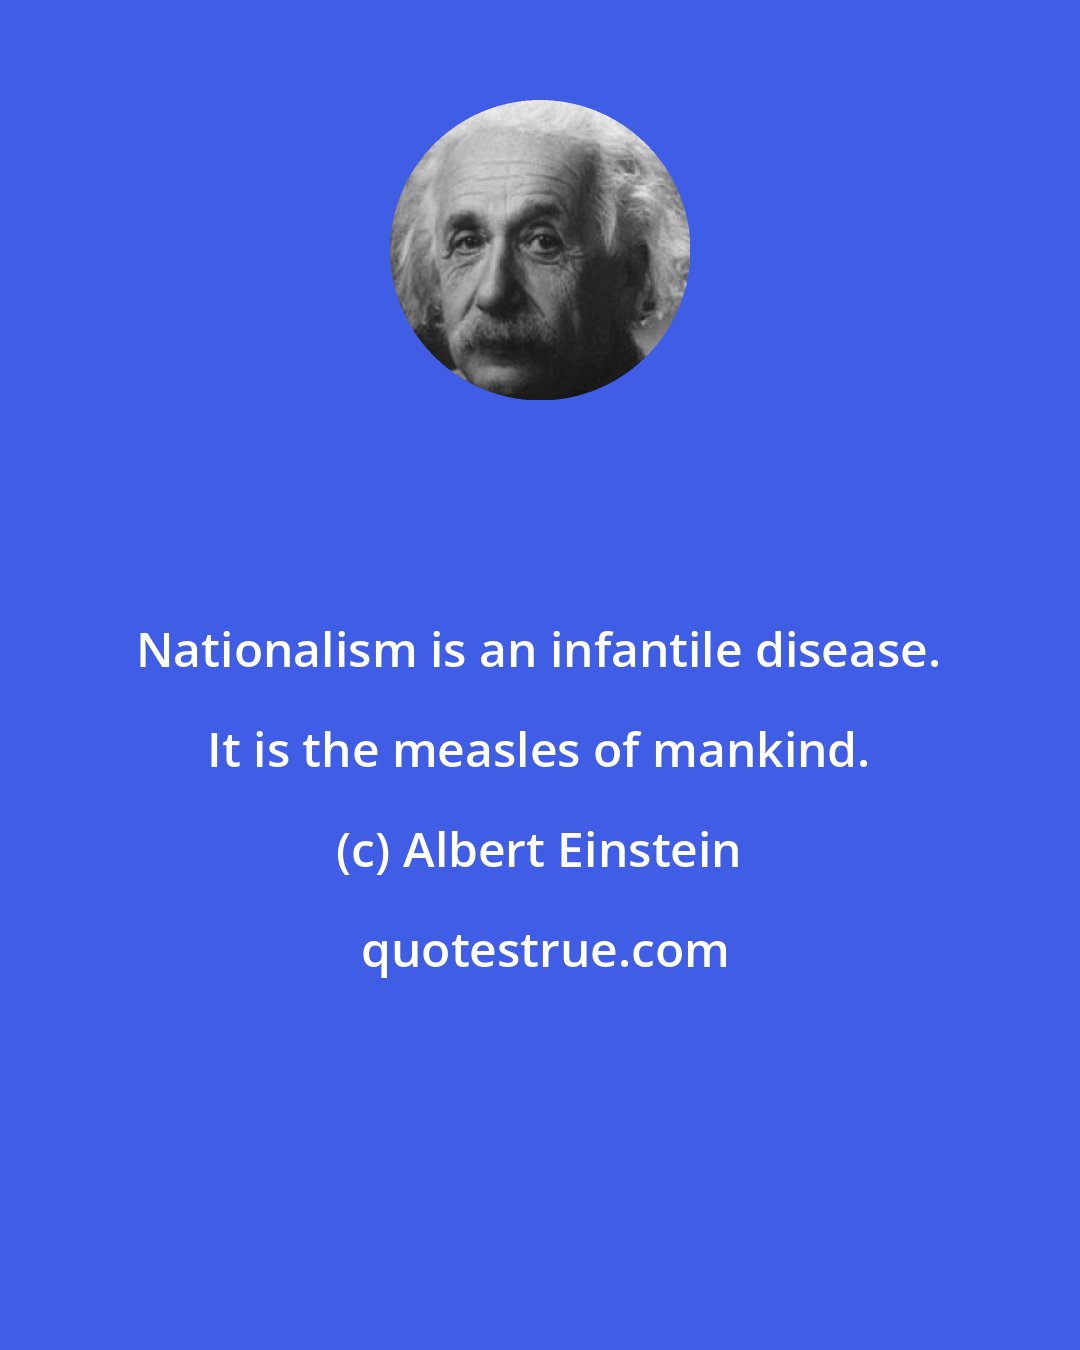 Albert Einstein: Nationalism is an infantile disease. It is the measles of mankind.